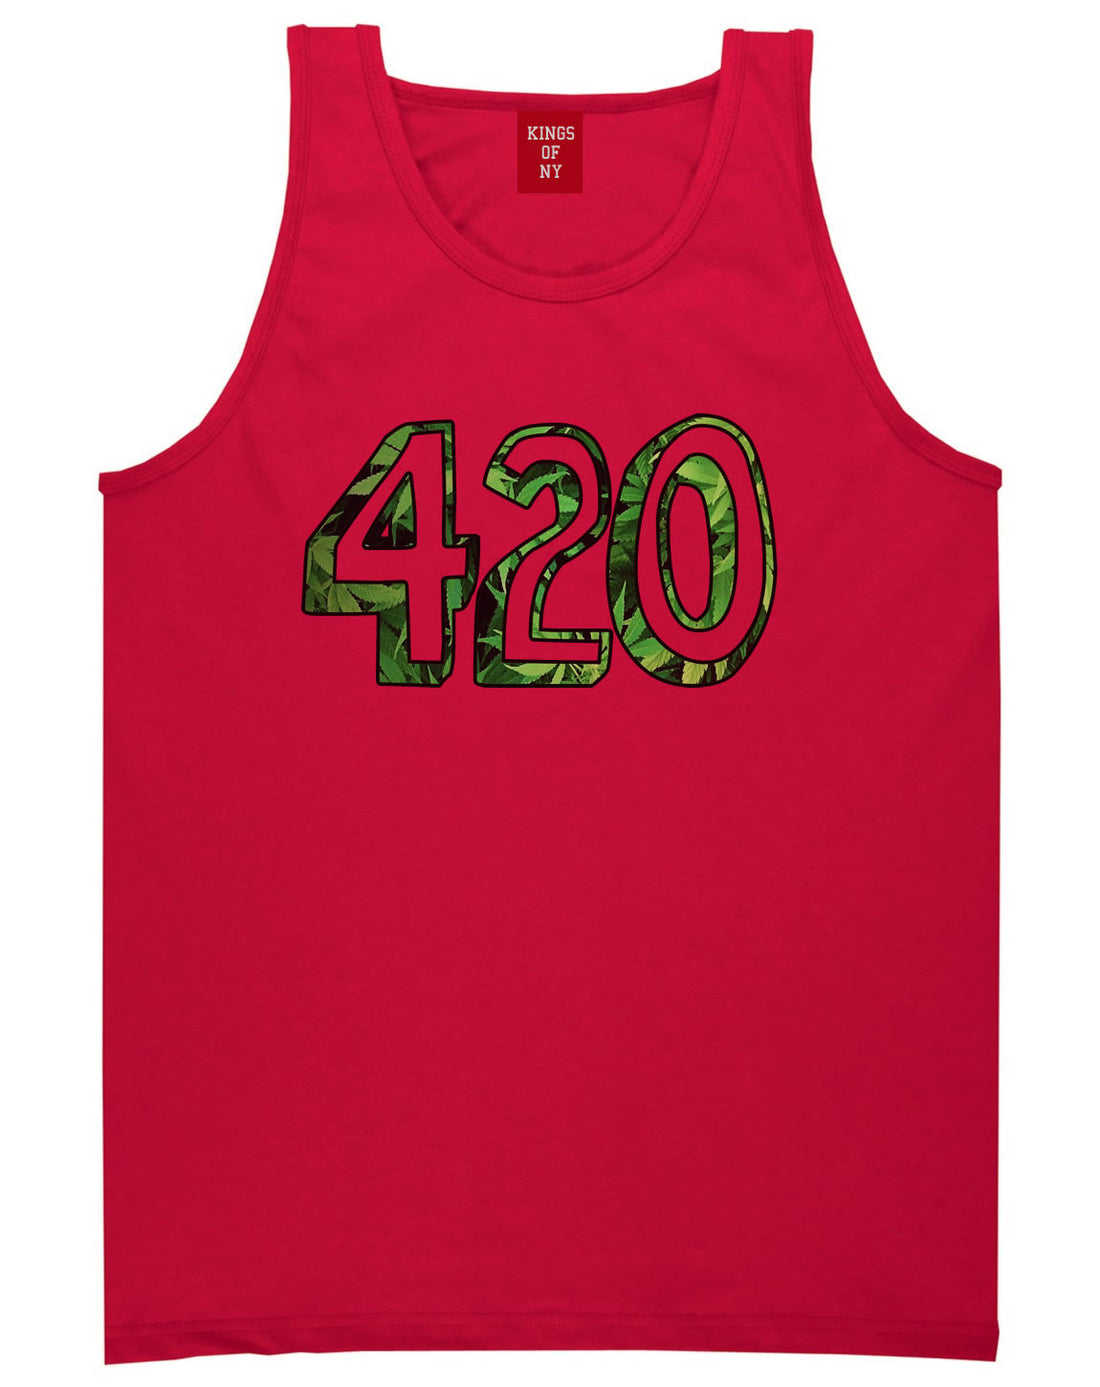  420 Weed Marijuana Print Tank Top in Red by Kings Of NY